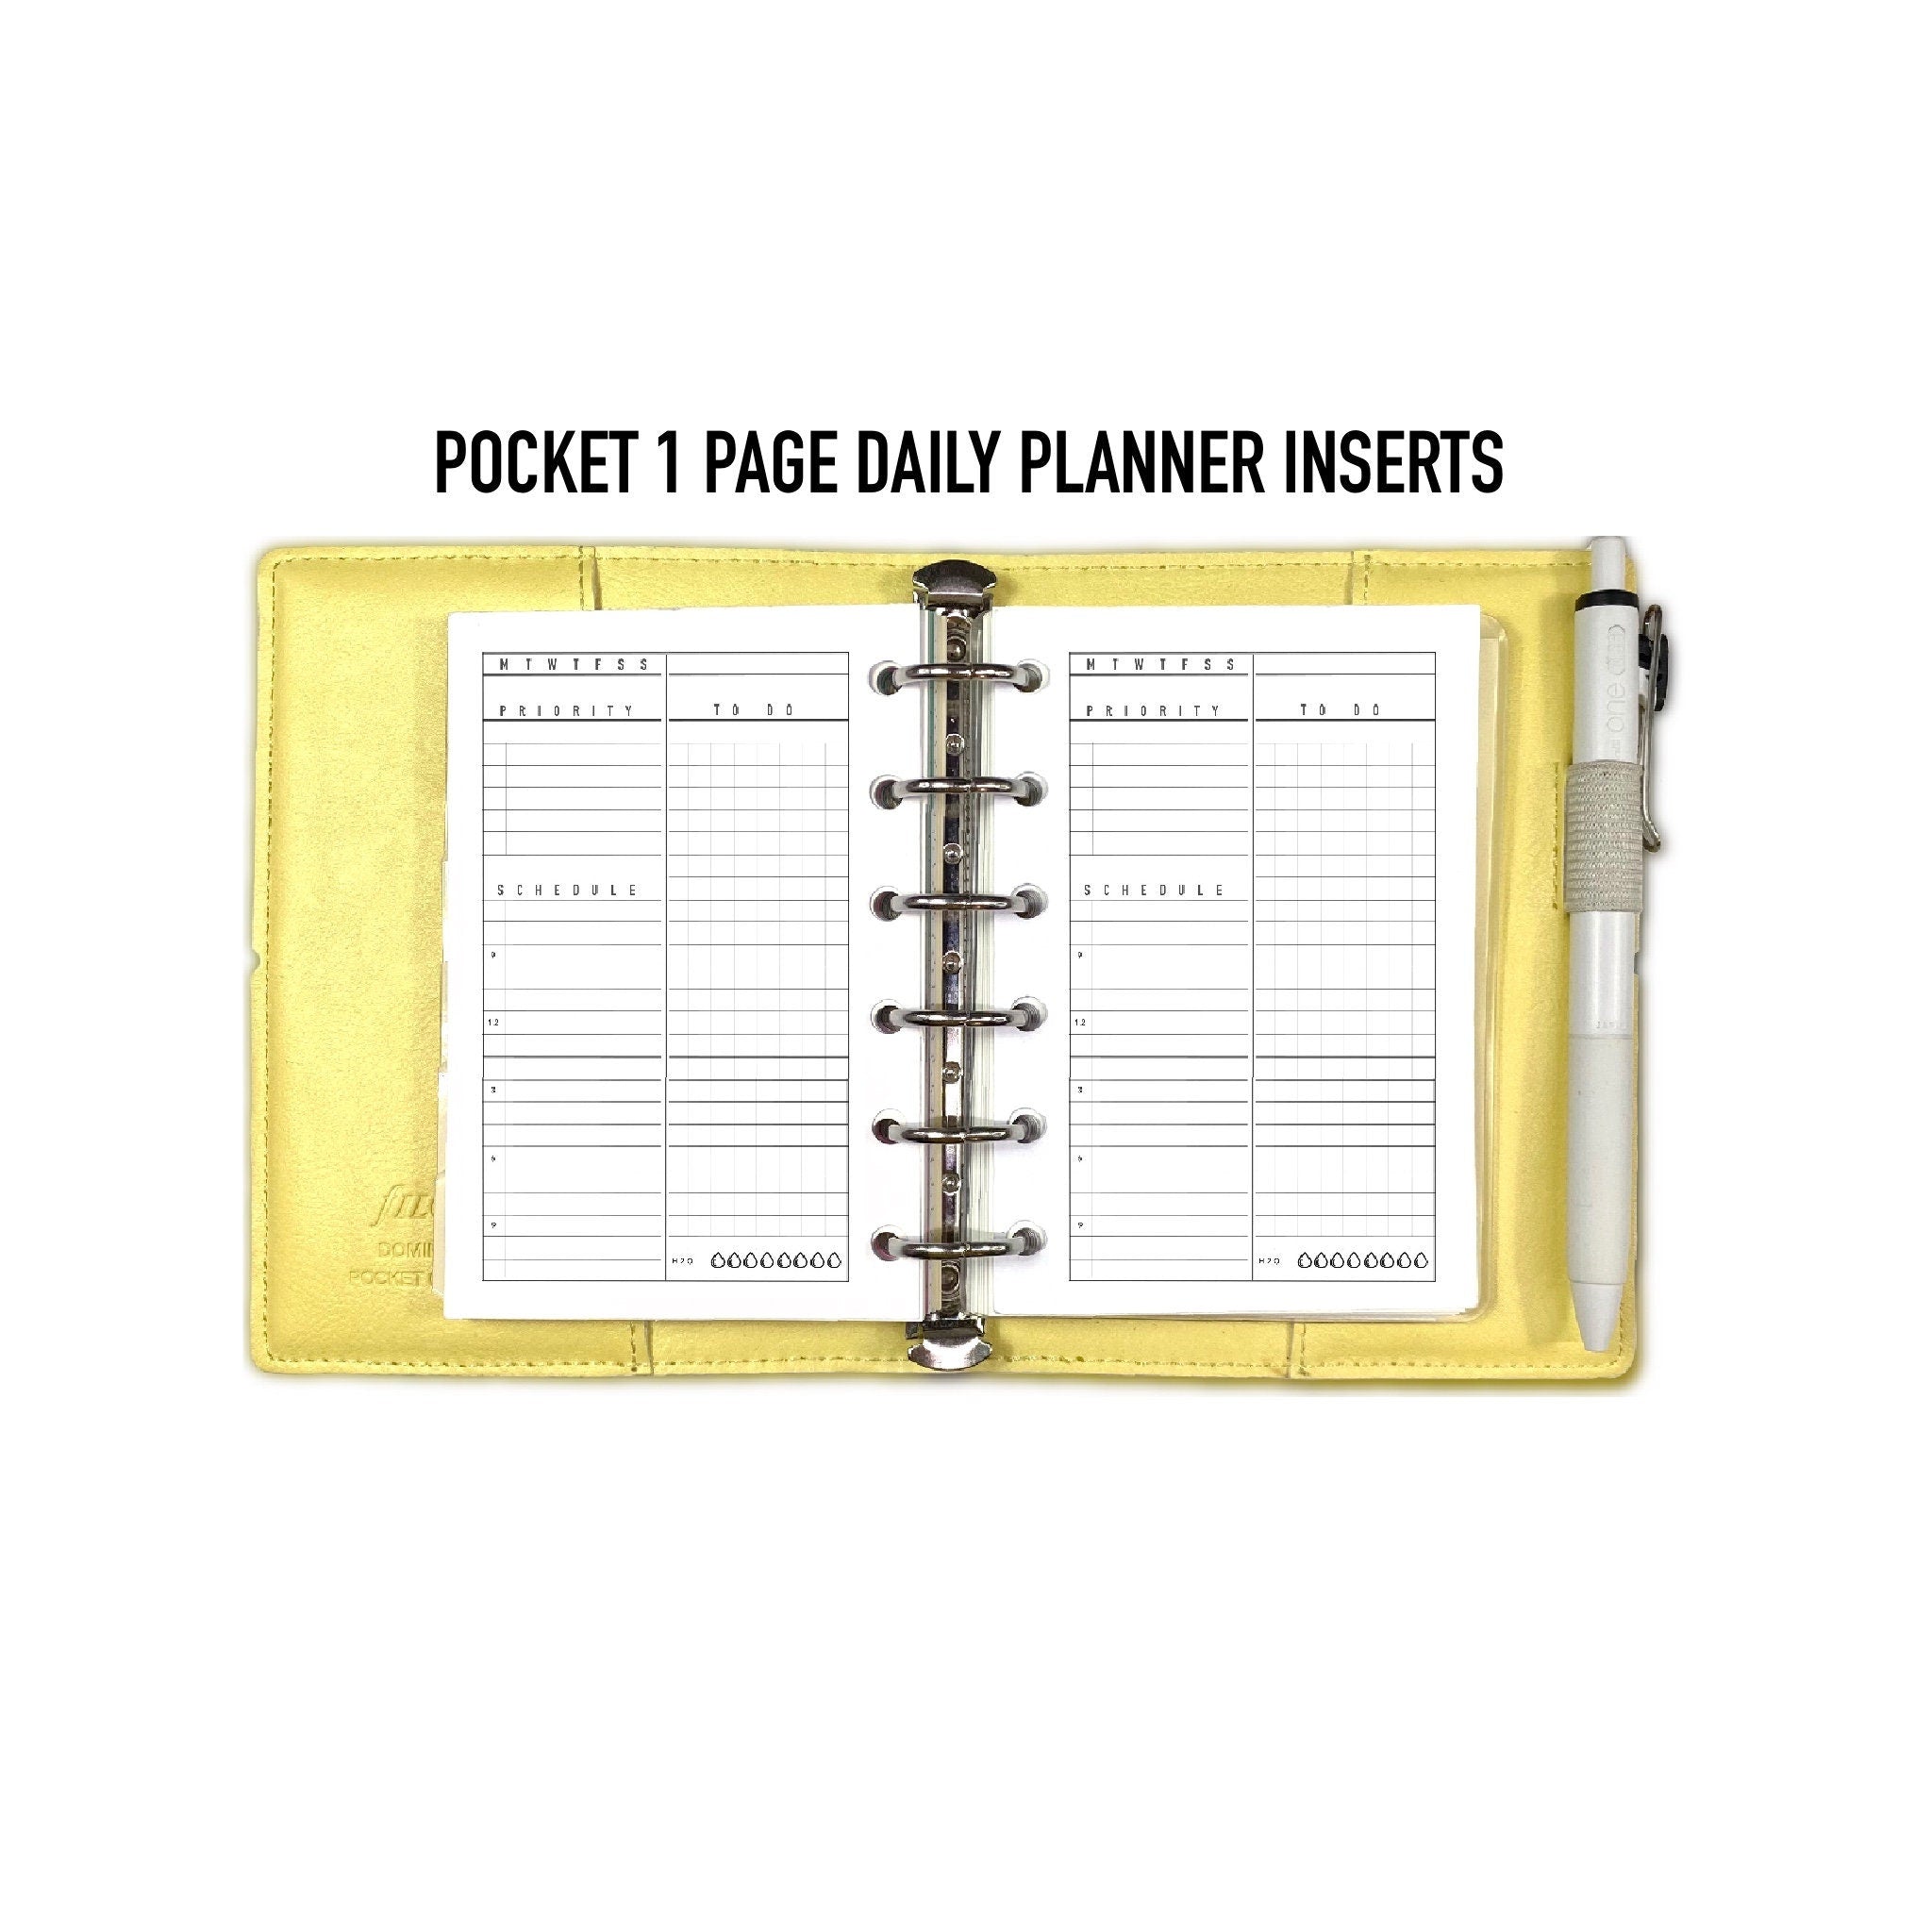 Daily Pocket Printable Inserts: DIY Filofax Pocket Inserts